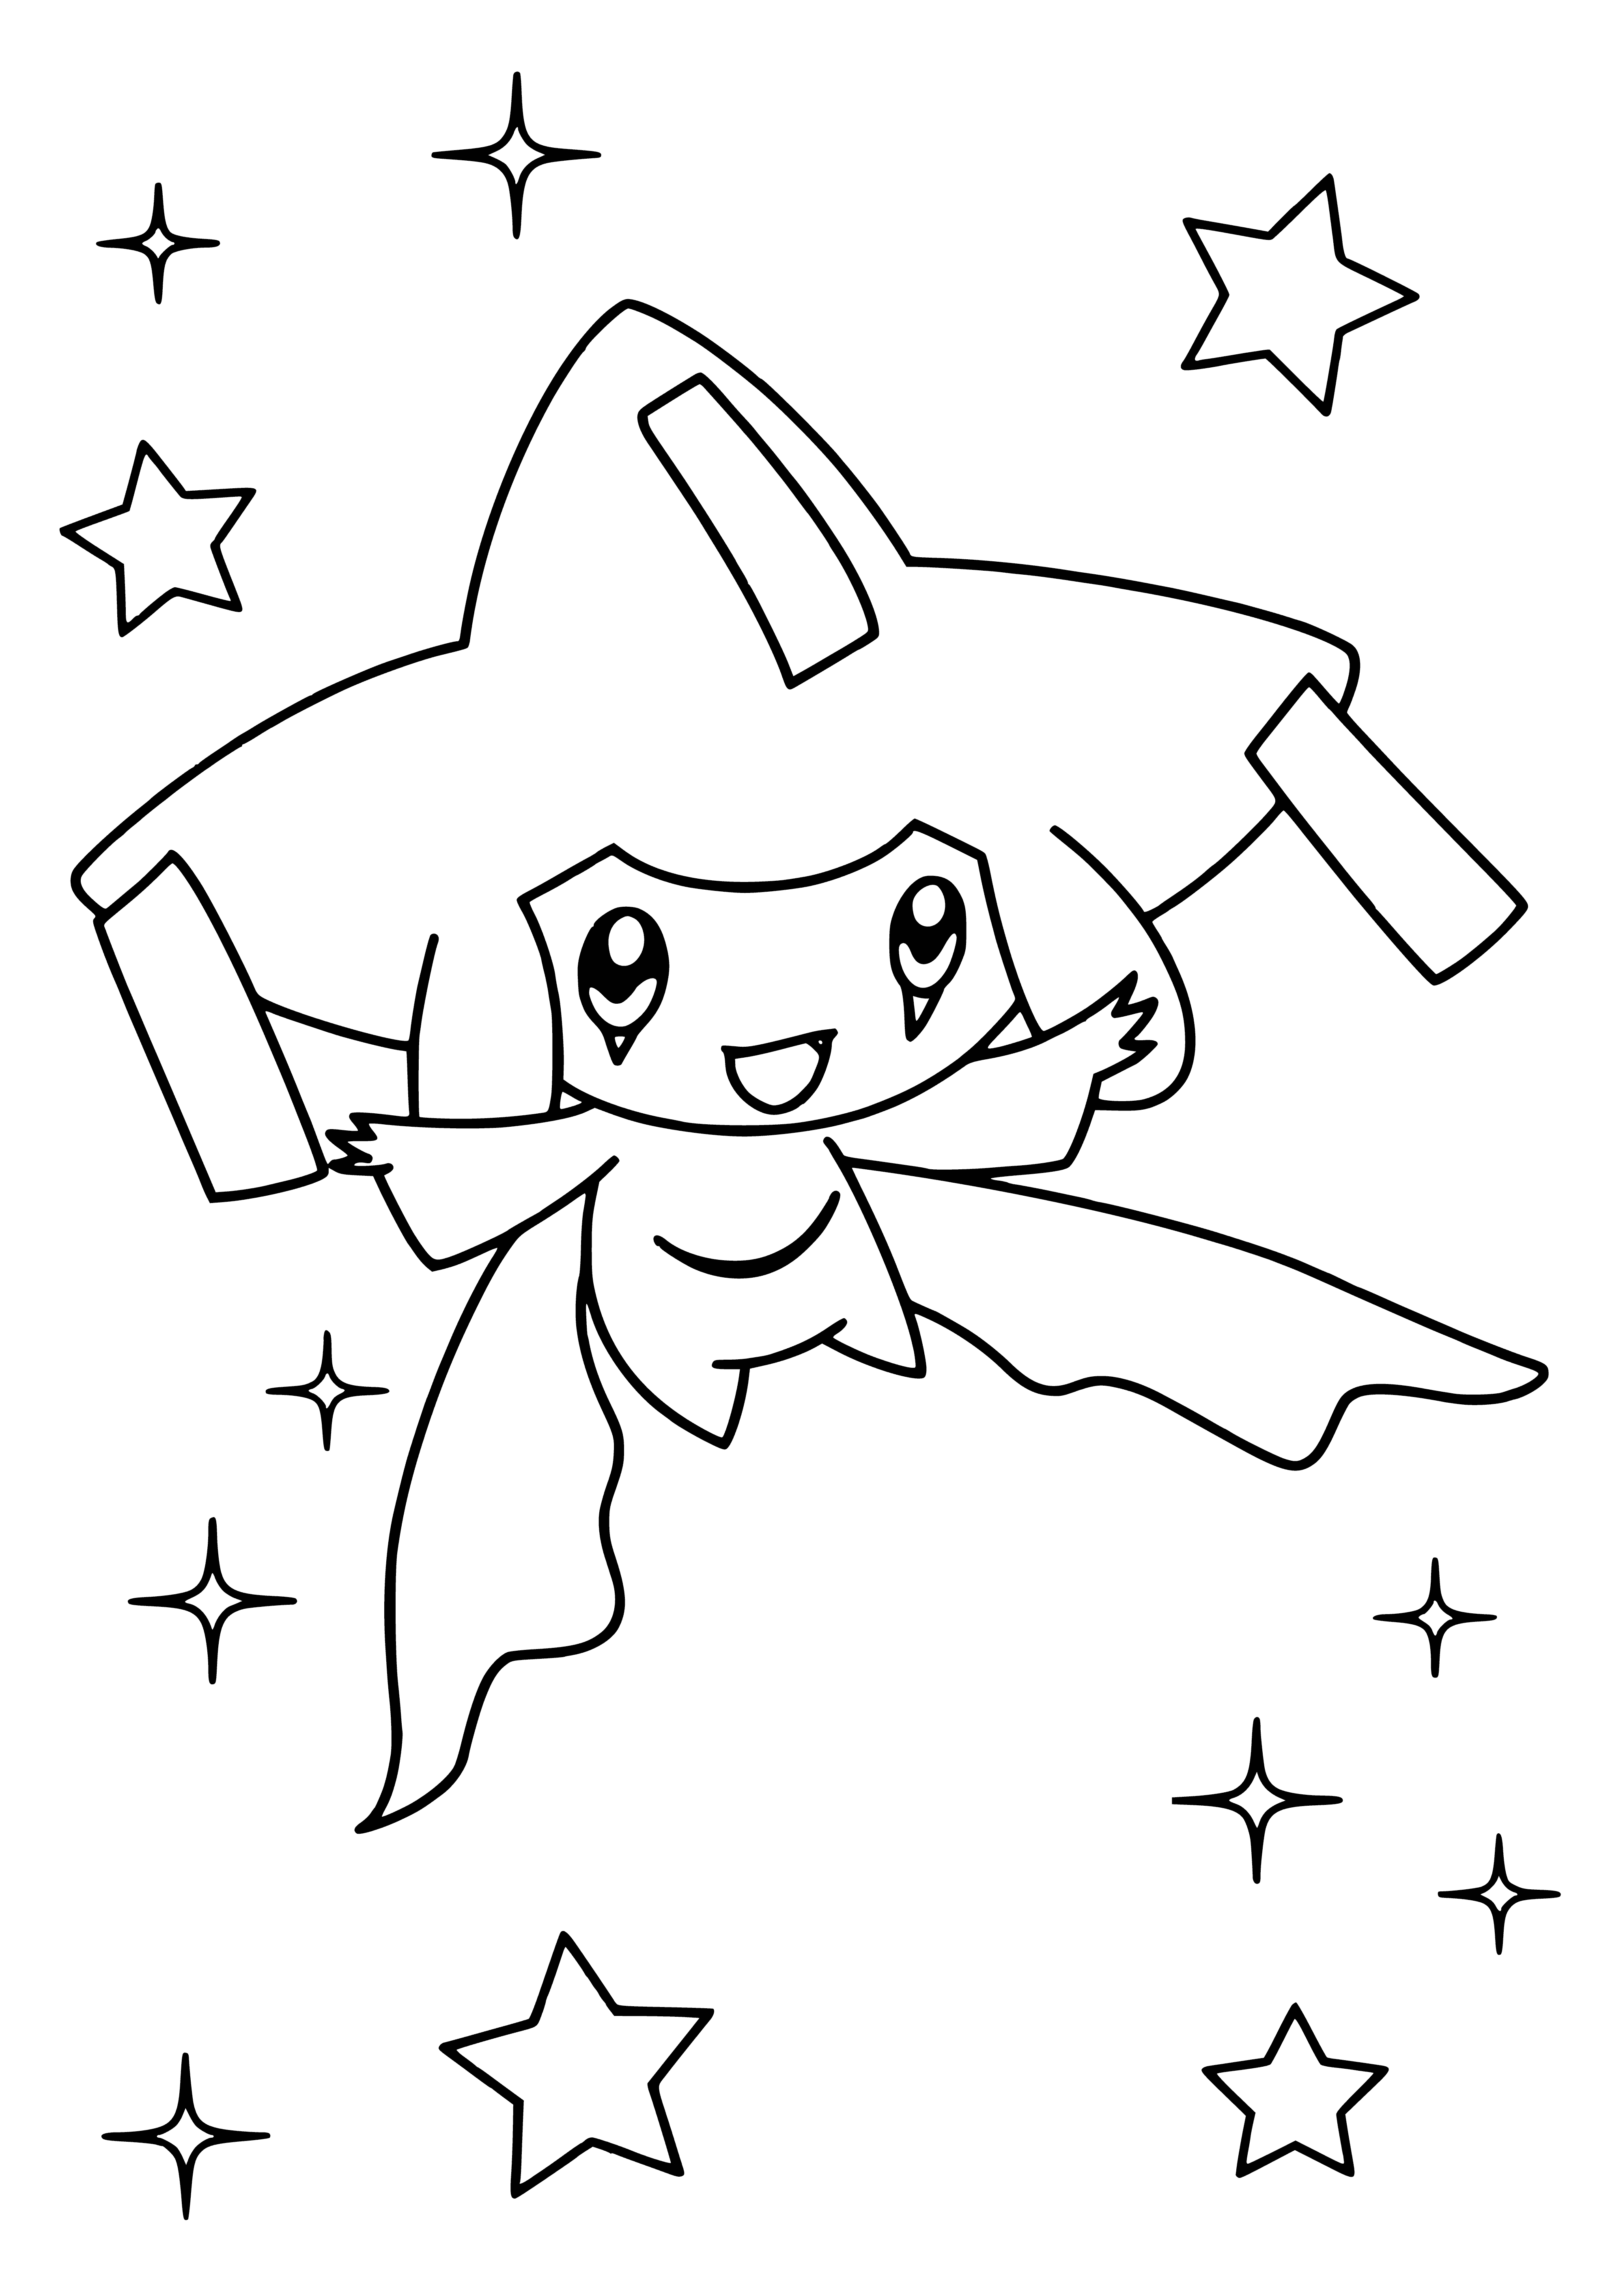 Legendary Pokemon Jirachi coloring page